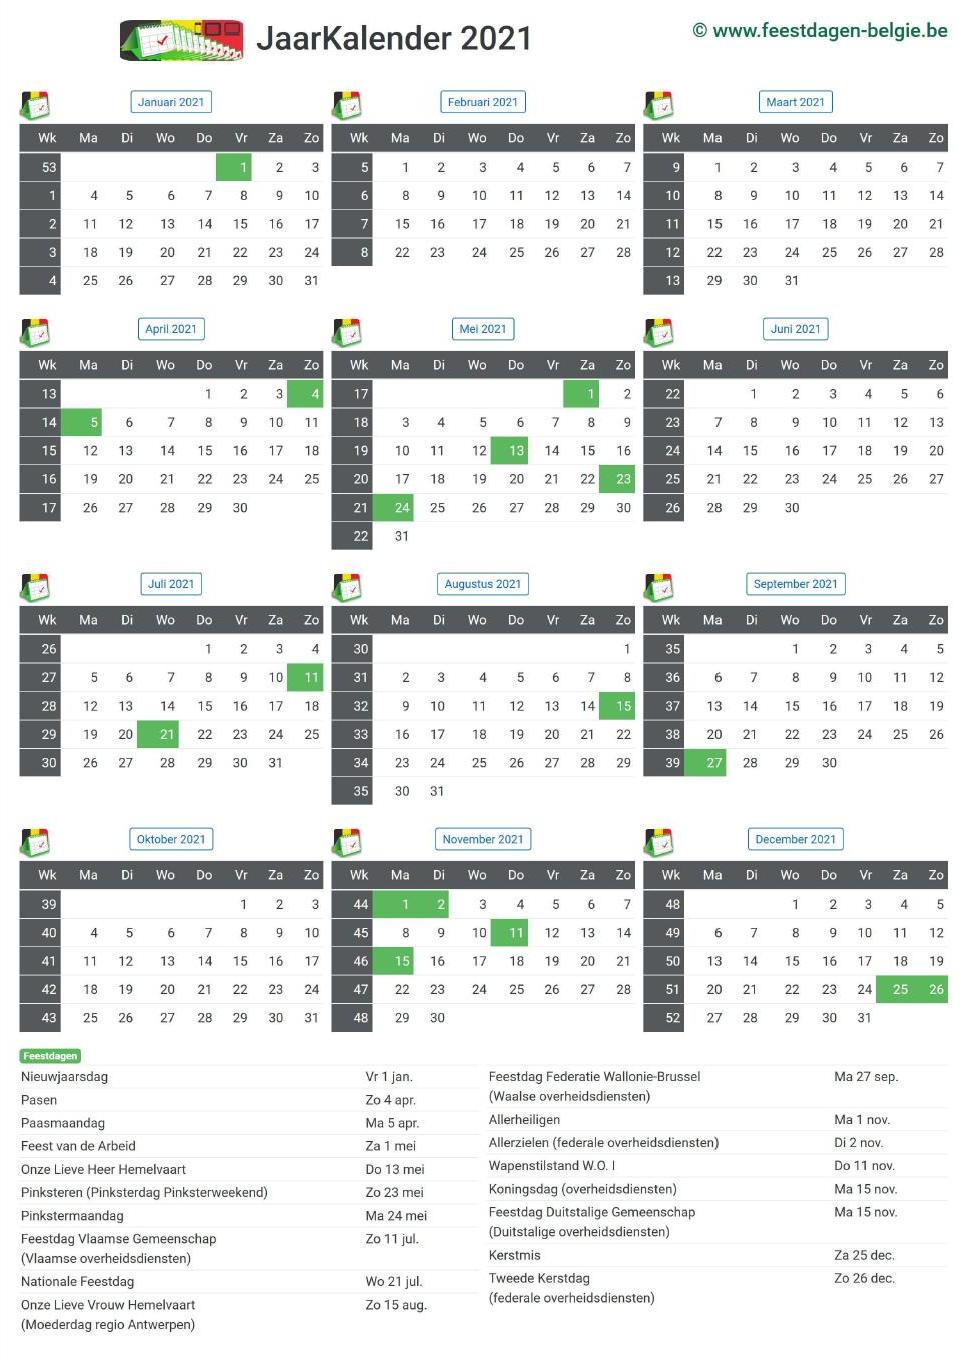 Kalender 2021 Met Feestdagen Kalender 2021 A4 Staand Preview By Feestbelgie On Deviantart